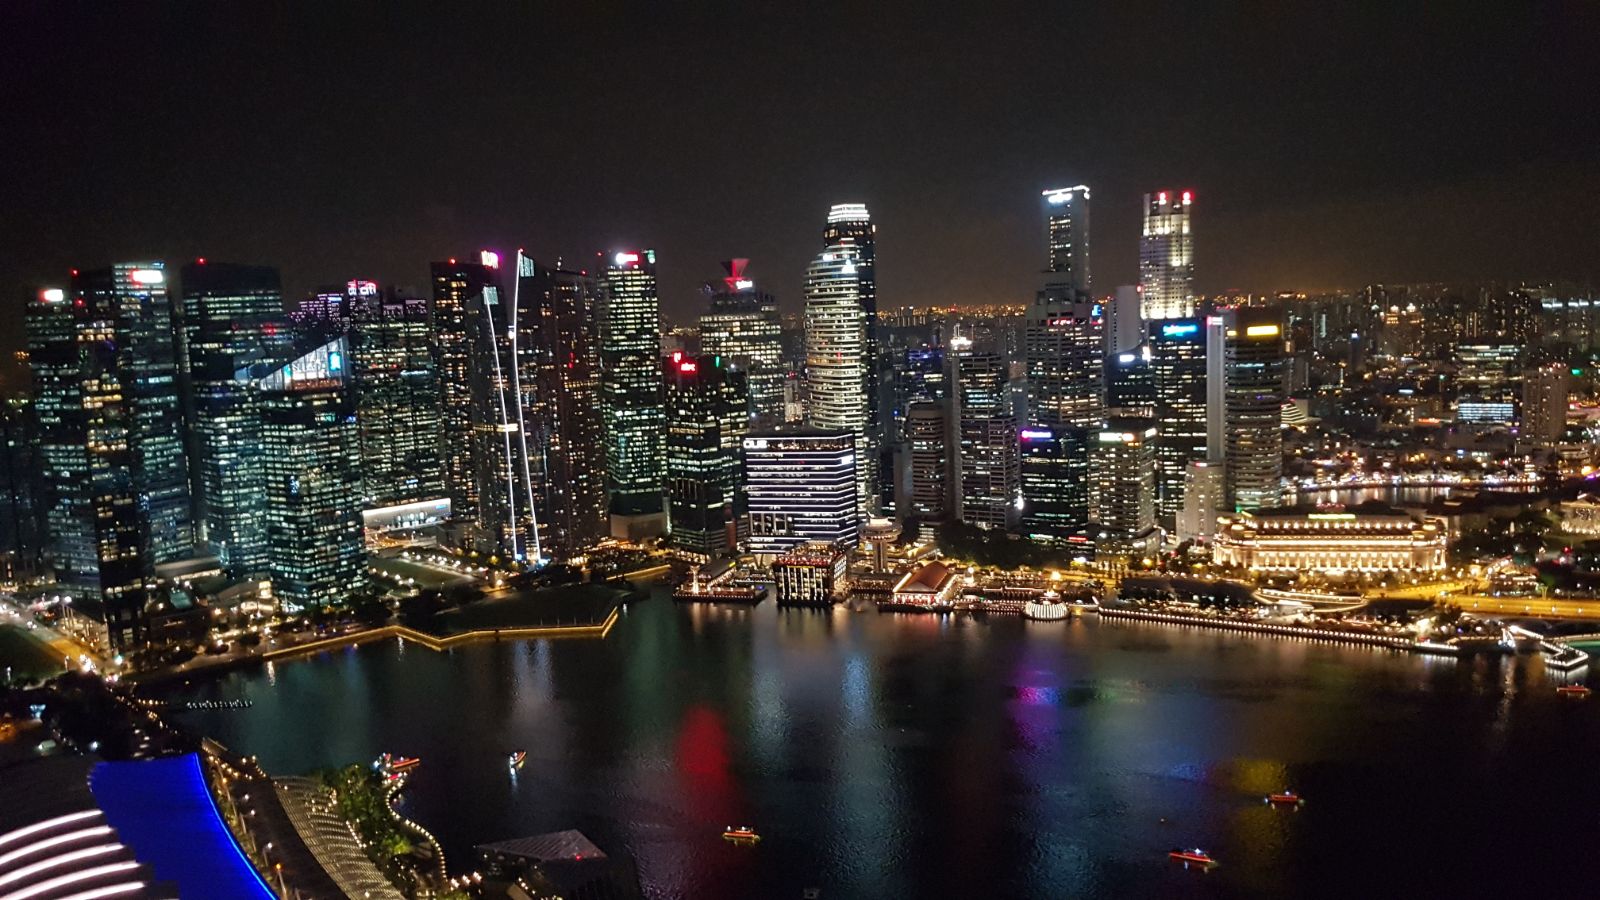 SkyPark observation deck Singapore